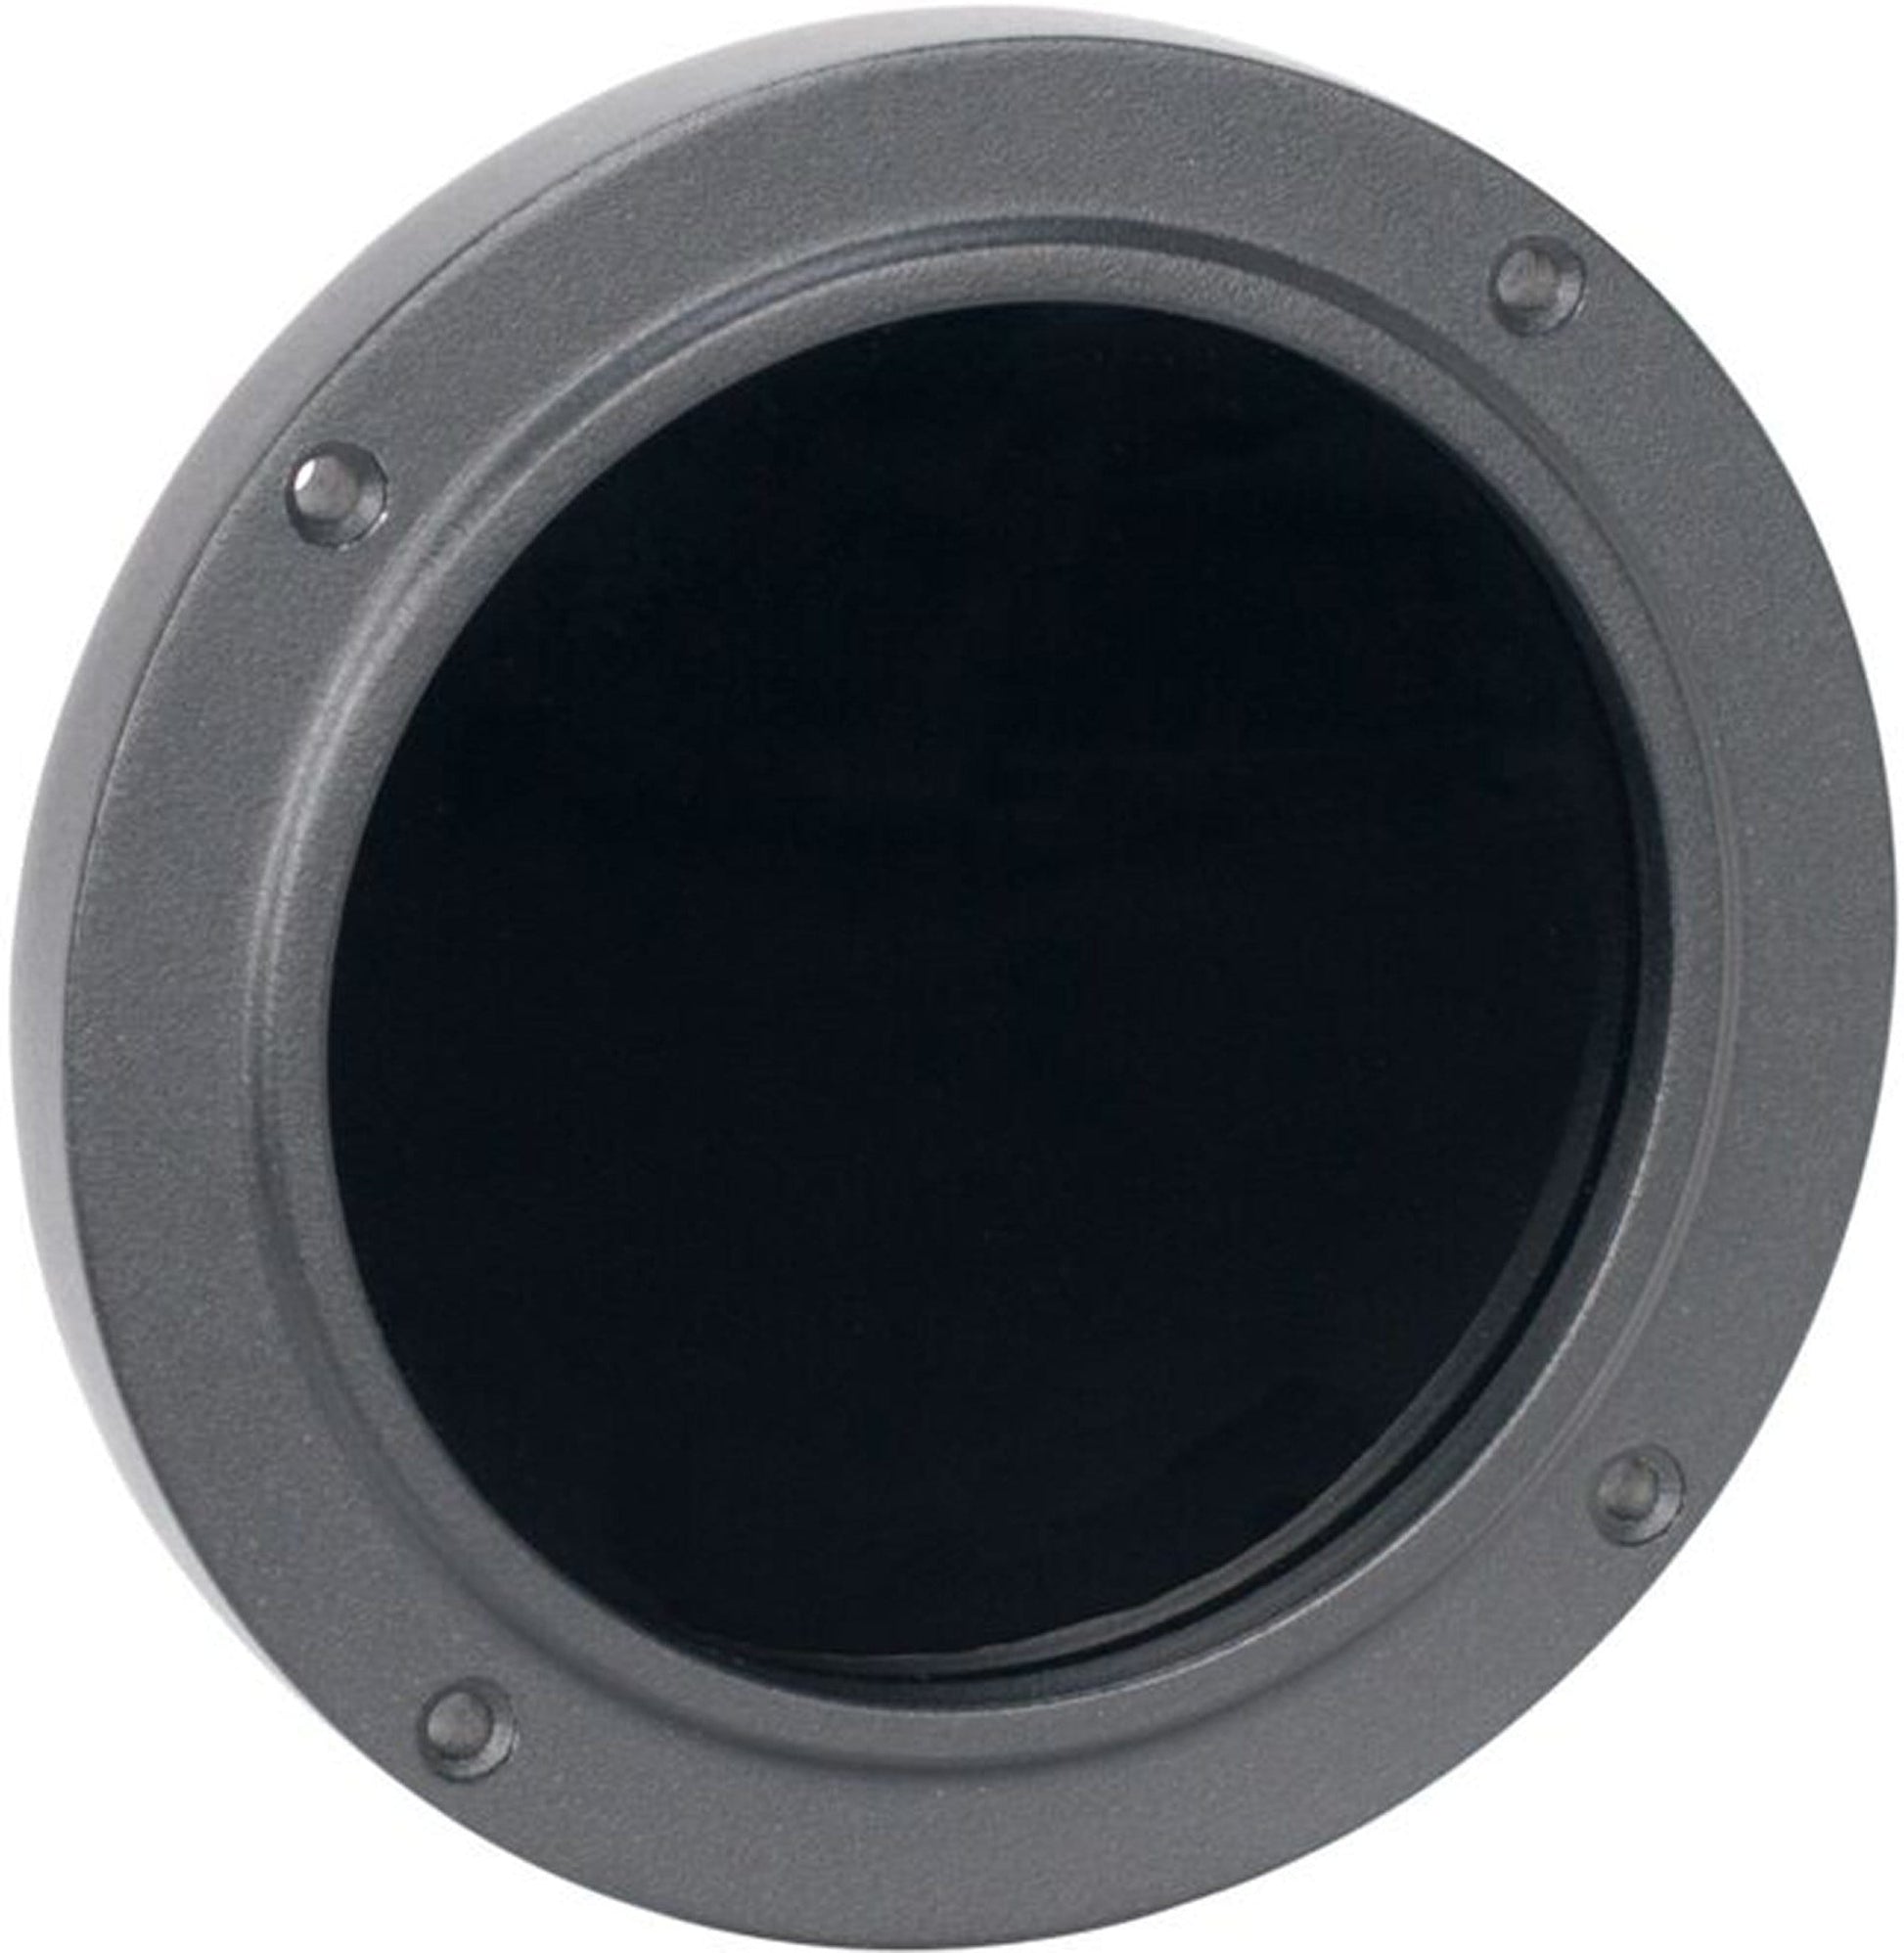 Magmatic Prisma Mini Par Black Glass UV Filter - ProSound and Stage Lighting